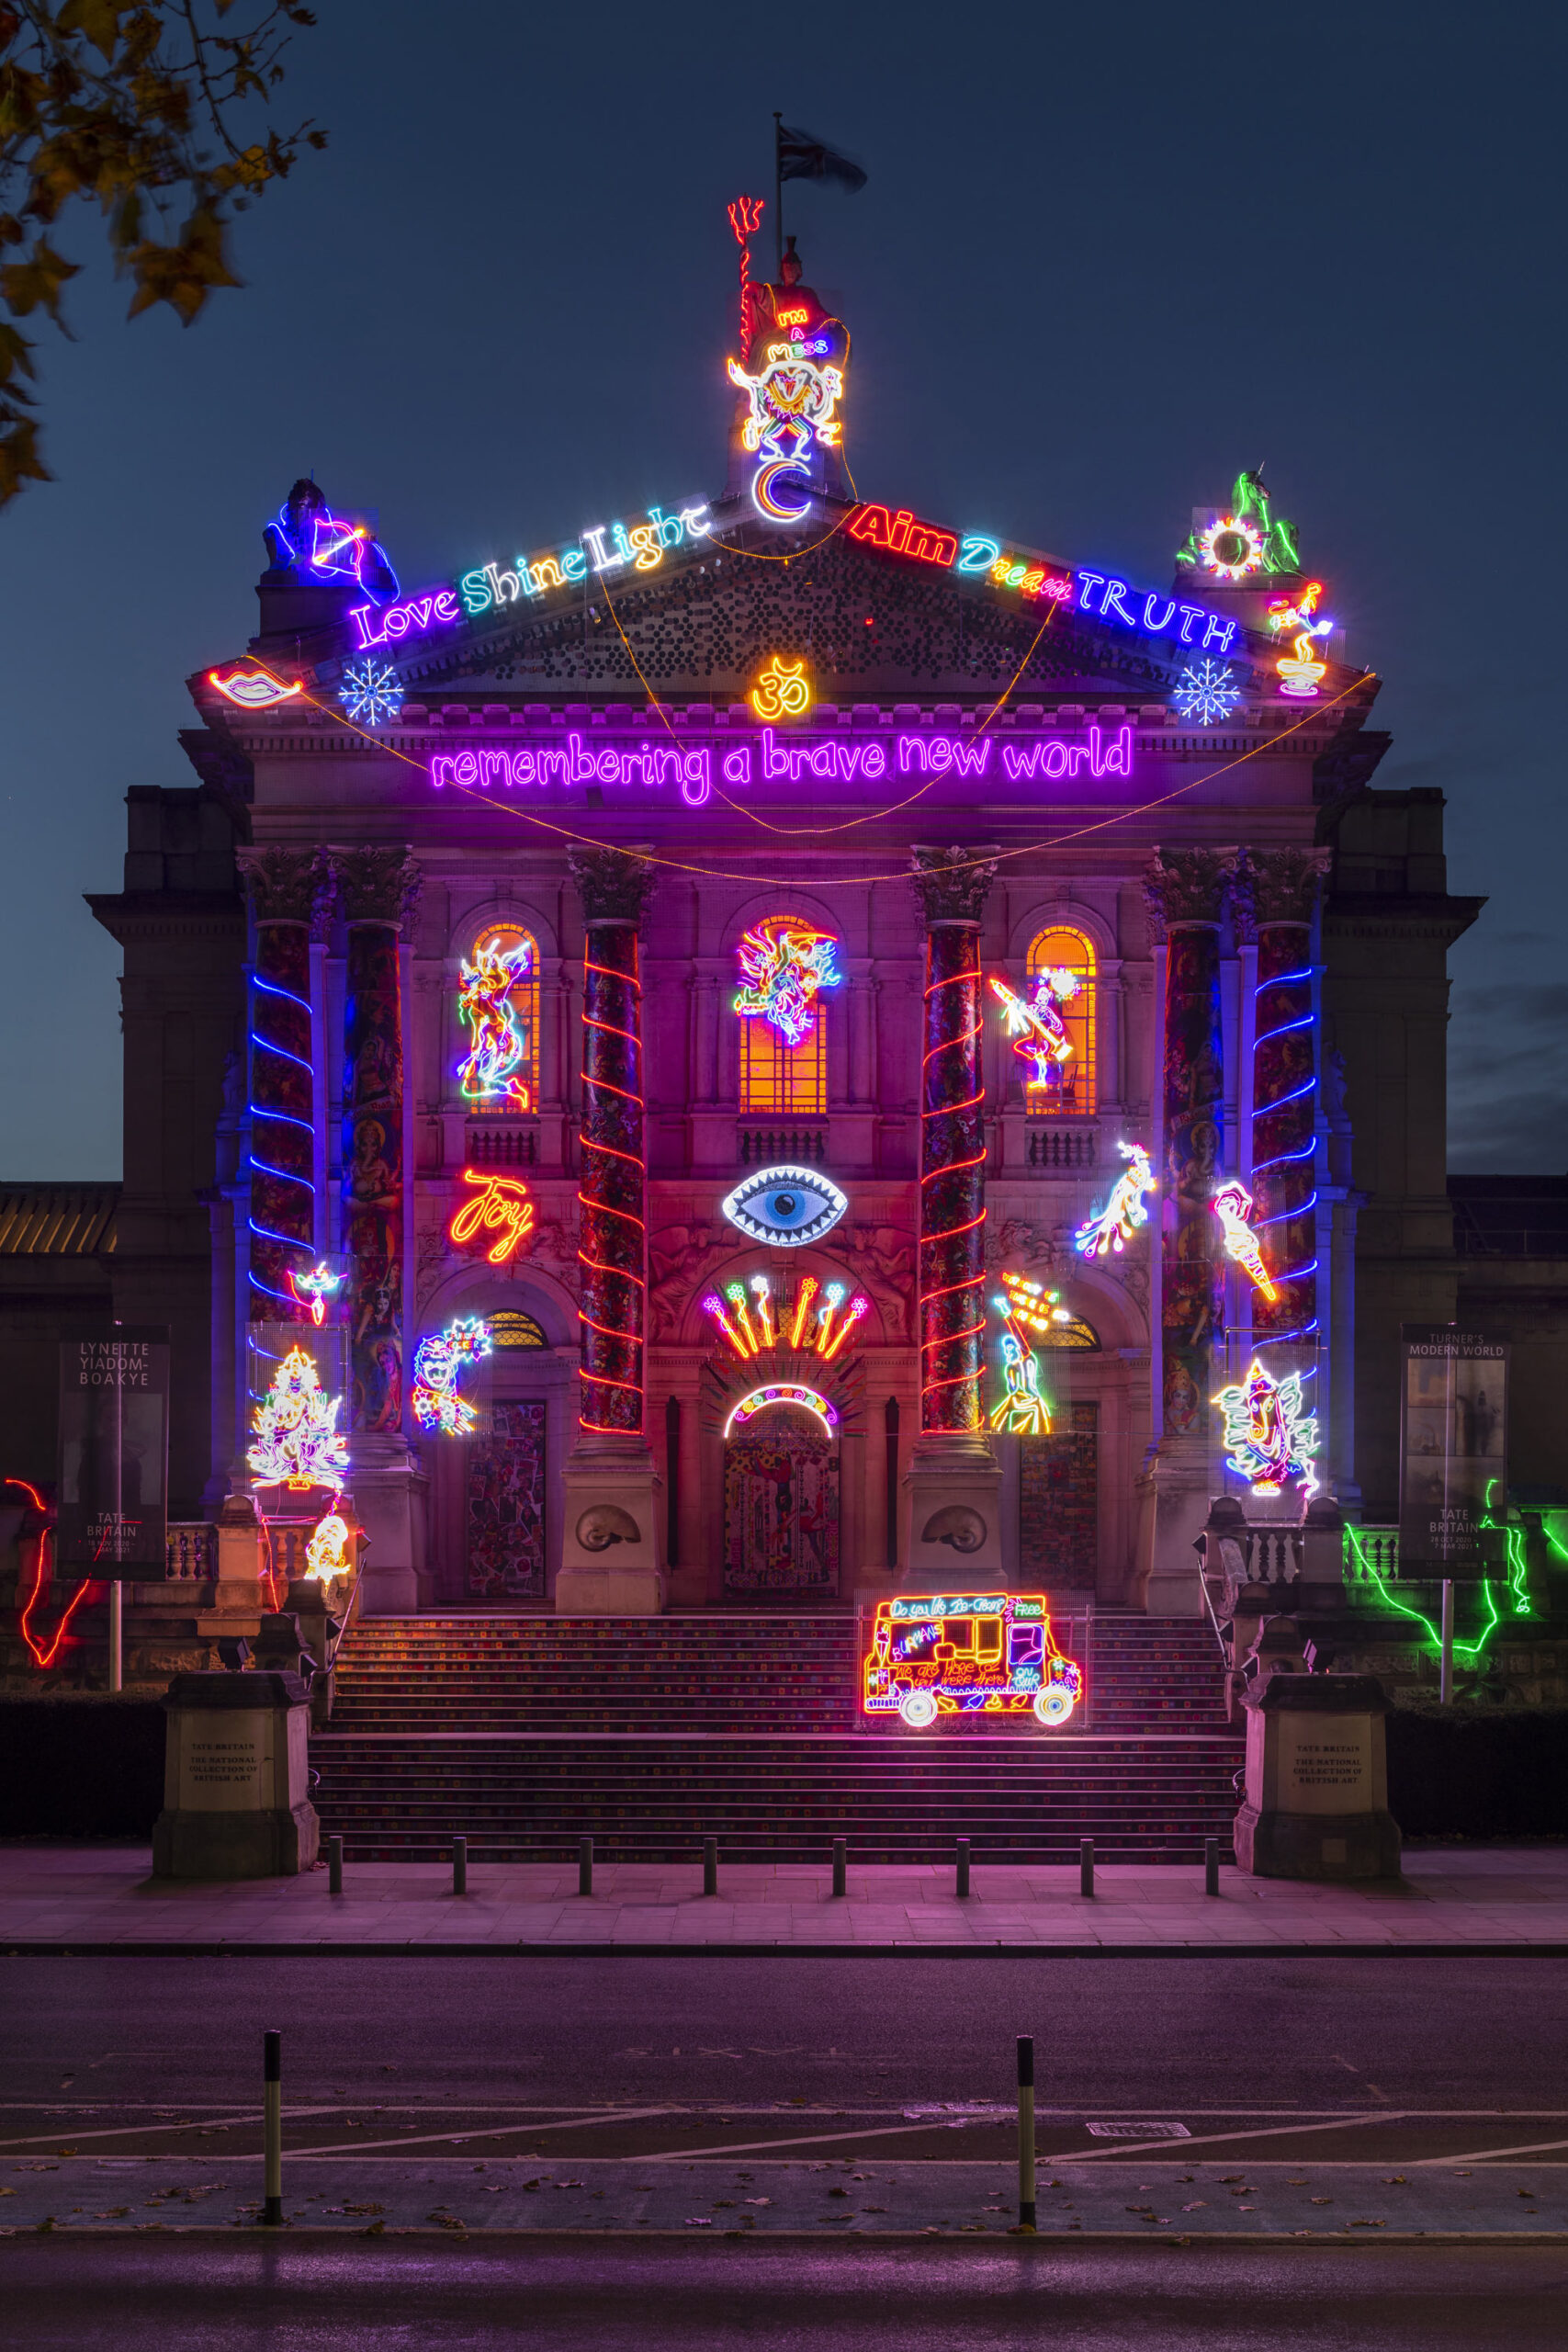 Cloaked in Light, Tate Britain Celebrates Diwali Through an Eclectic Technicolor Installation | 国外美陈 美陈网站 美陈前沿 